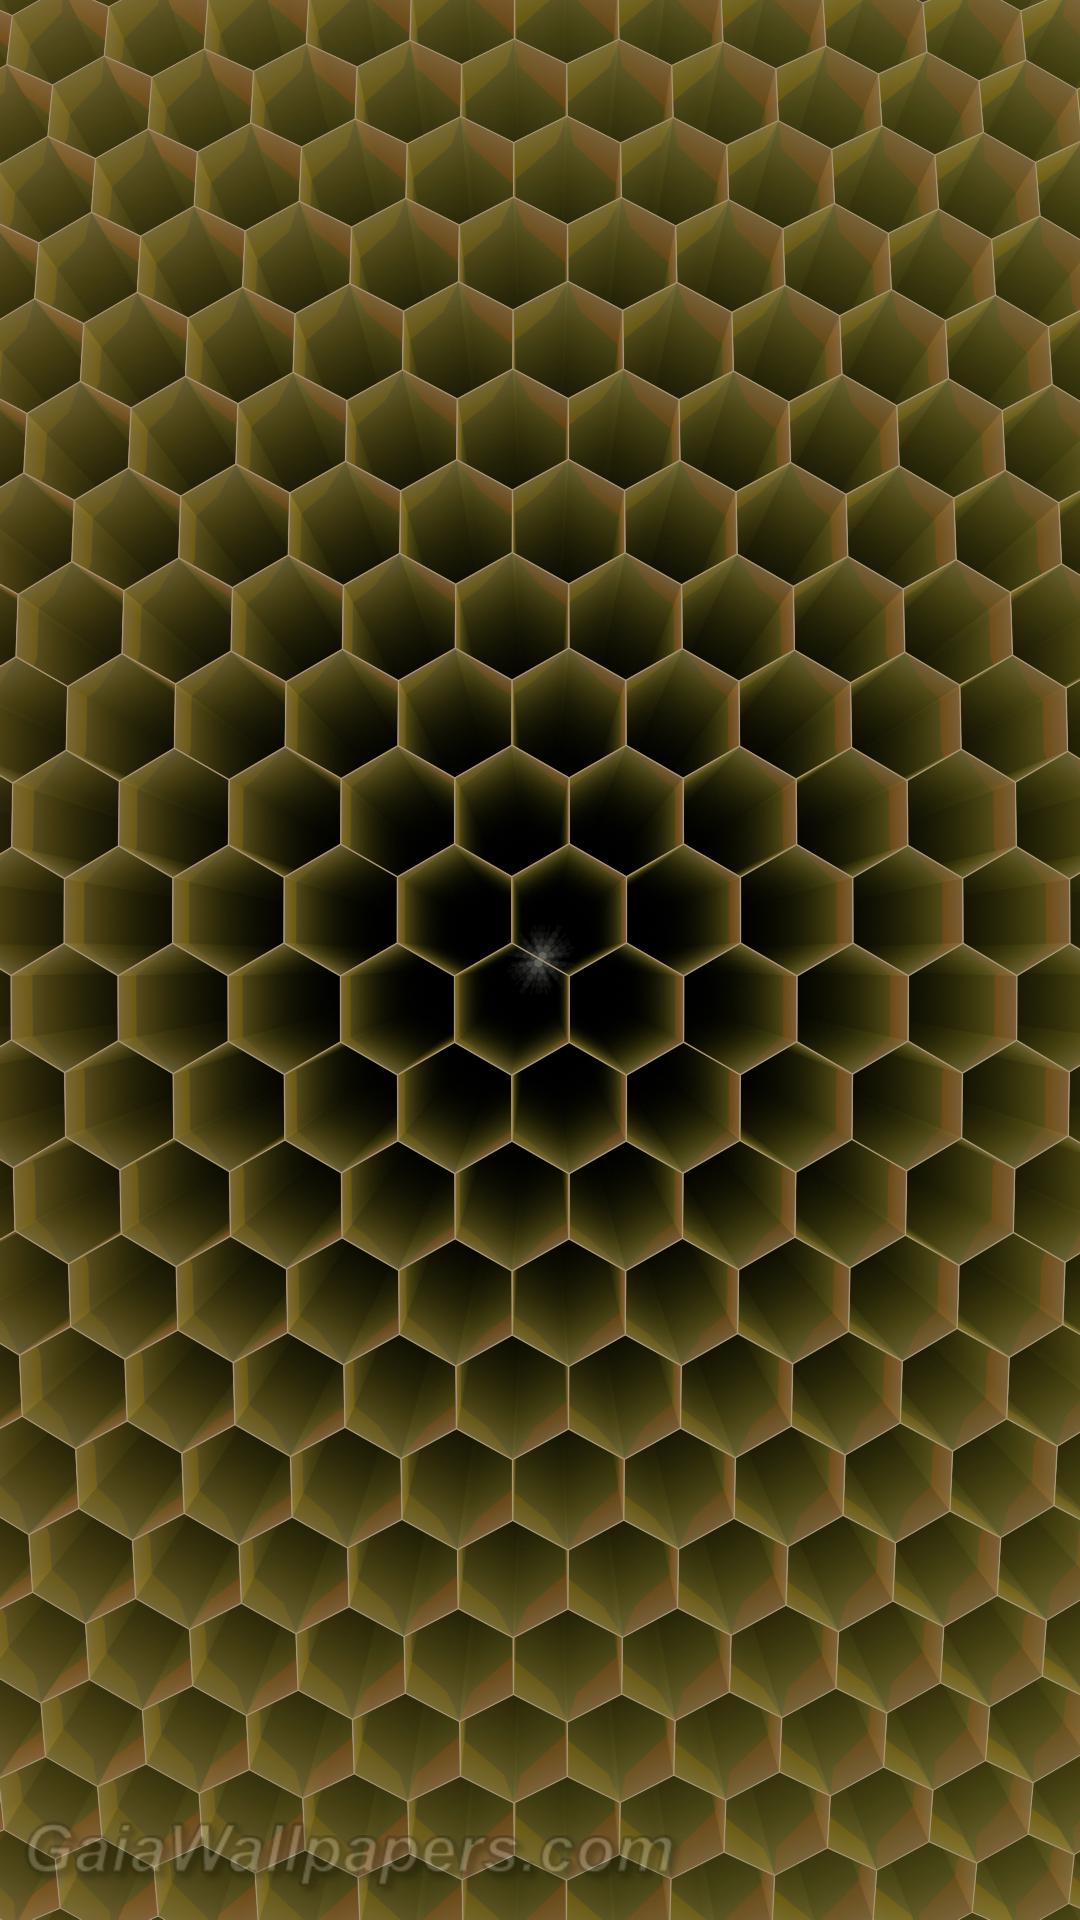 Perfect virtual honeycomb - Free desktop wallpapers